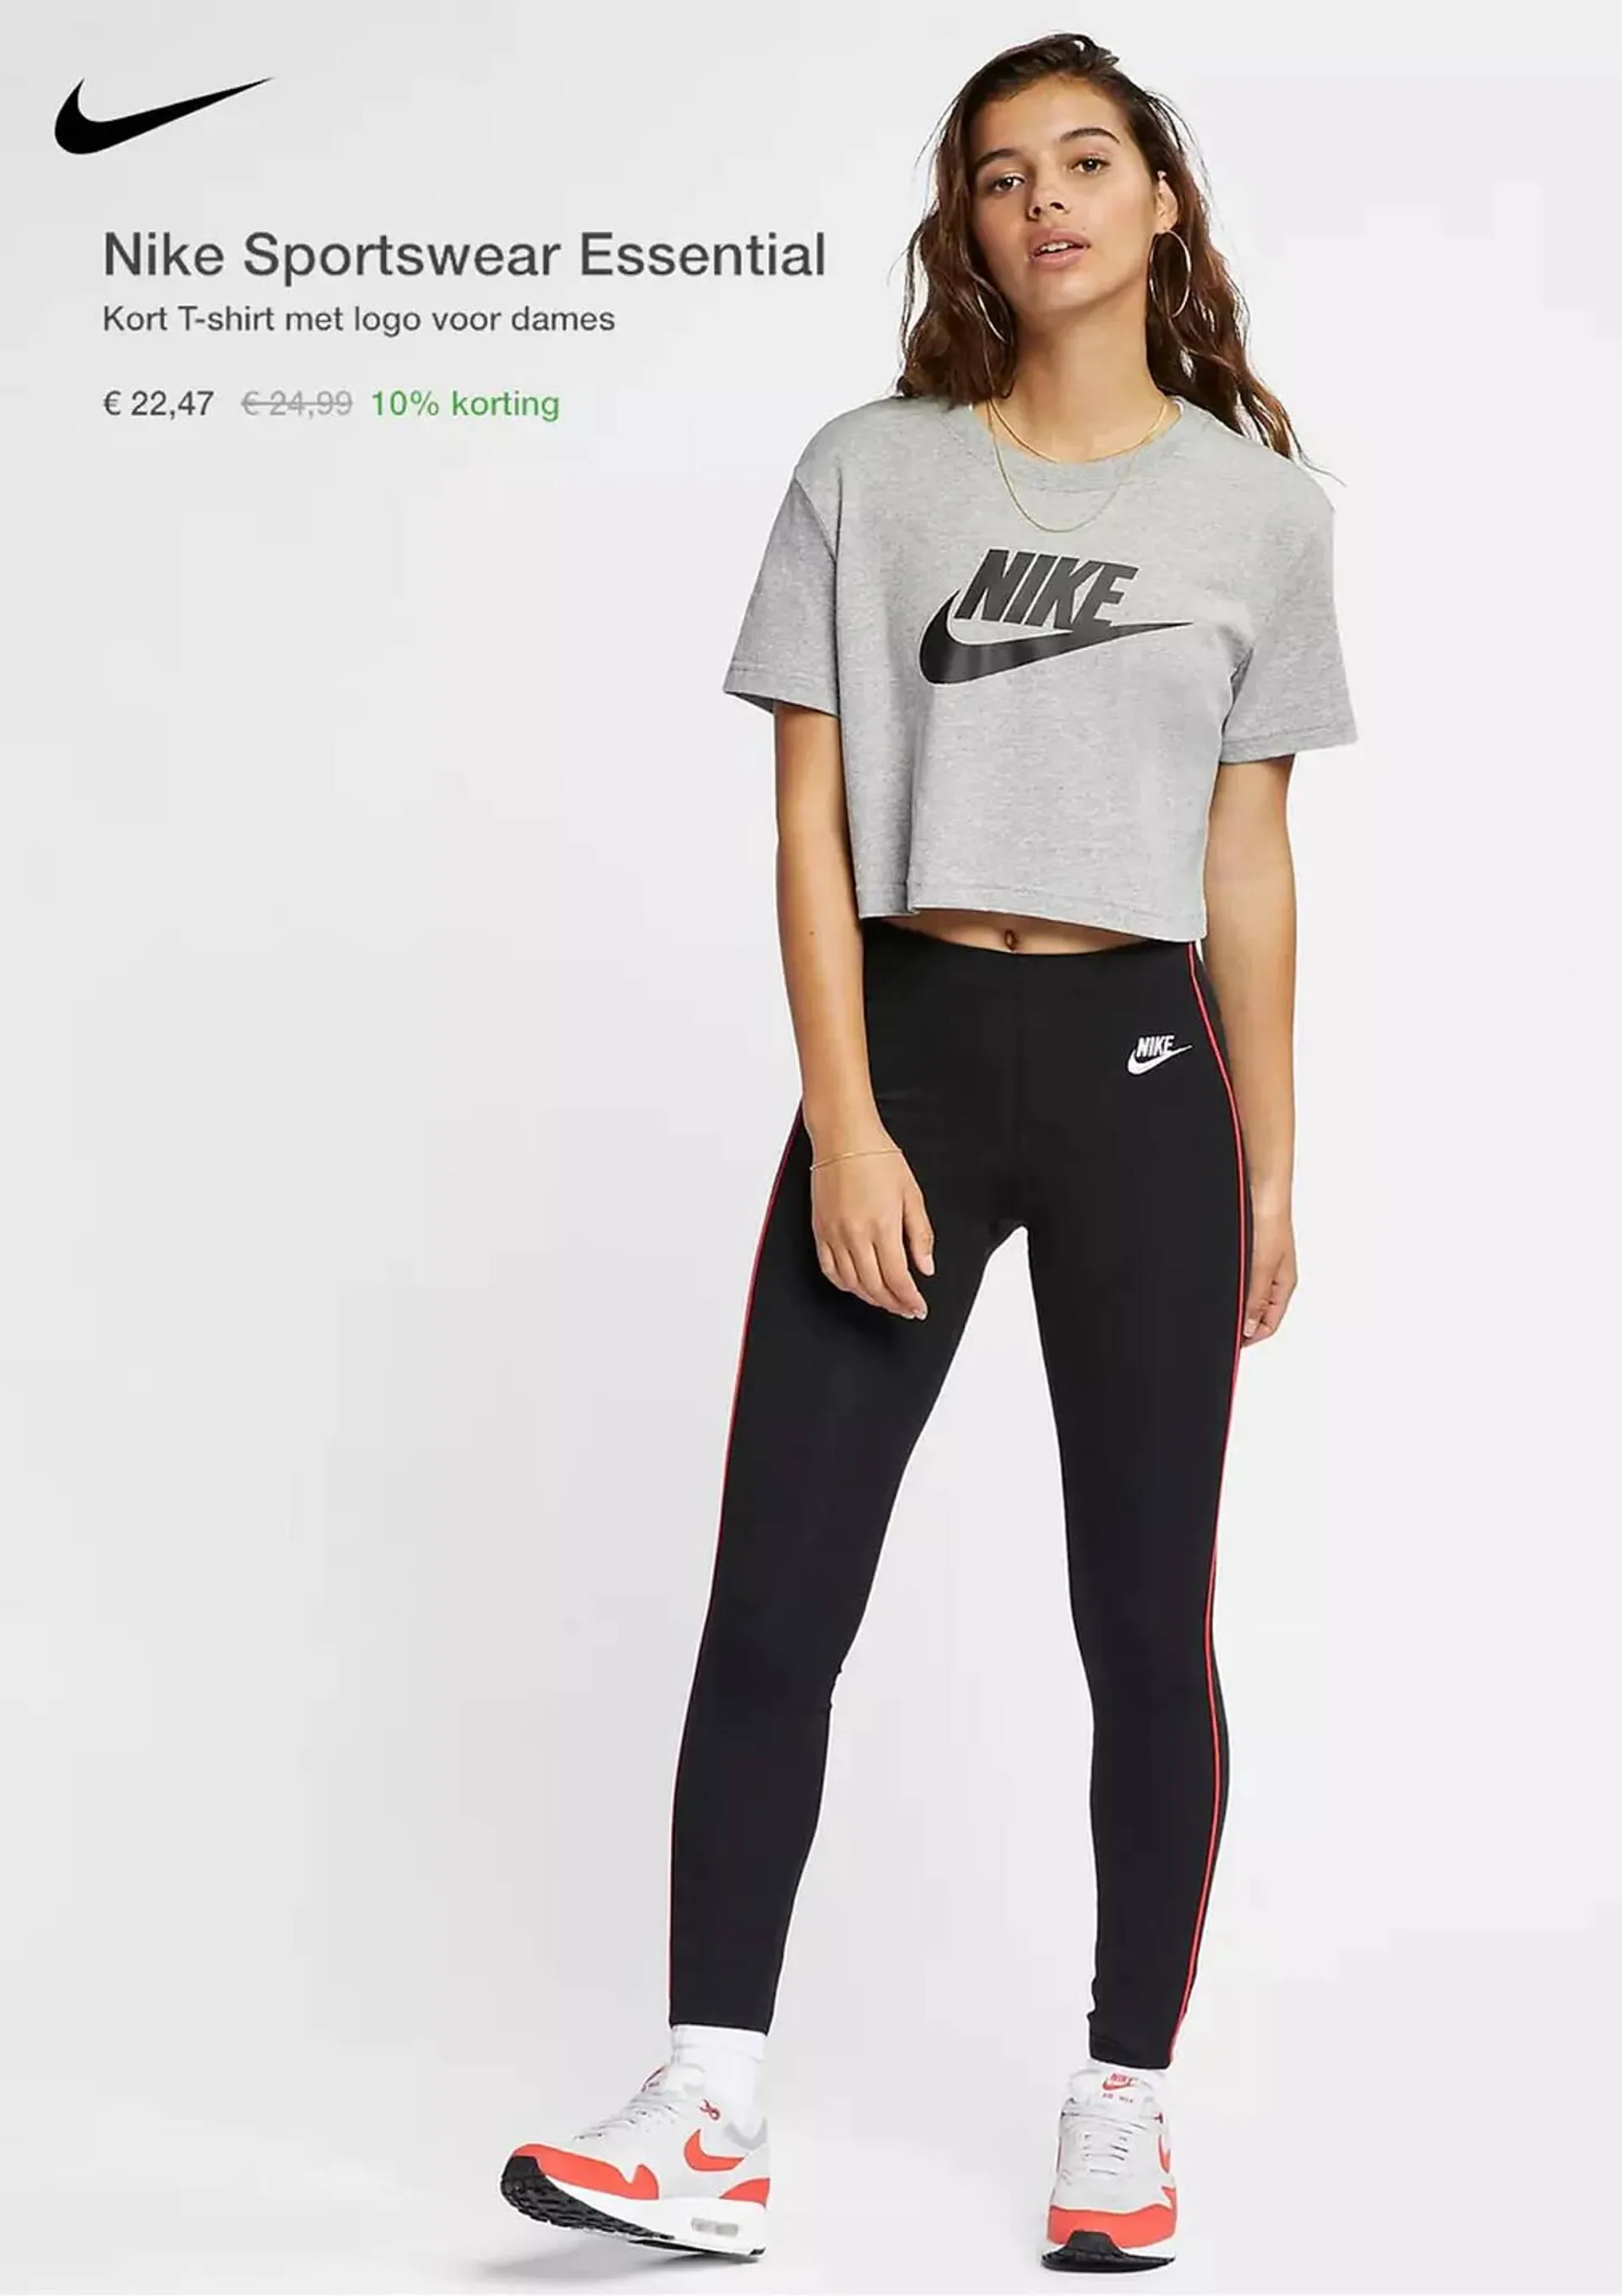 Nike Folder - 2